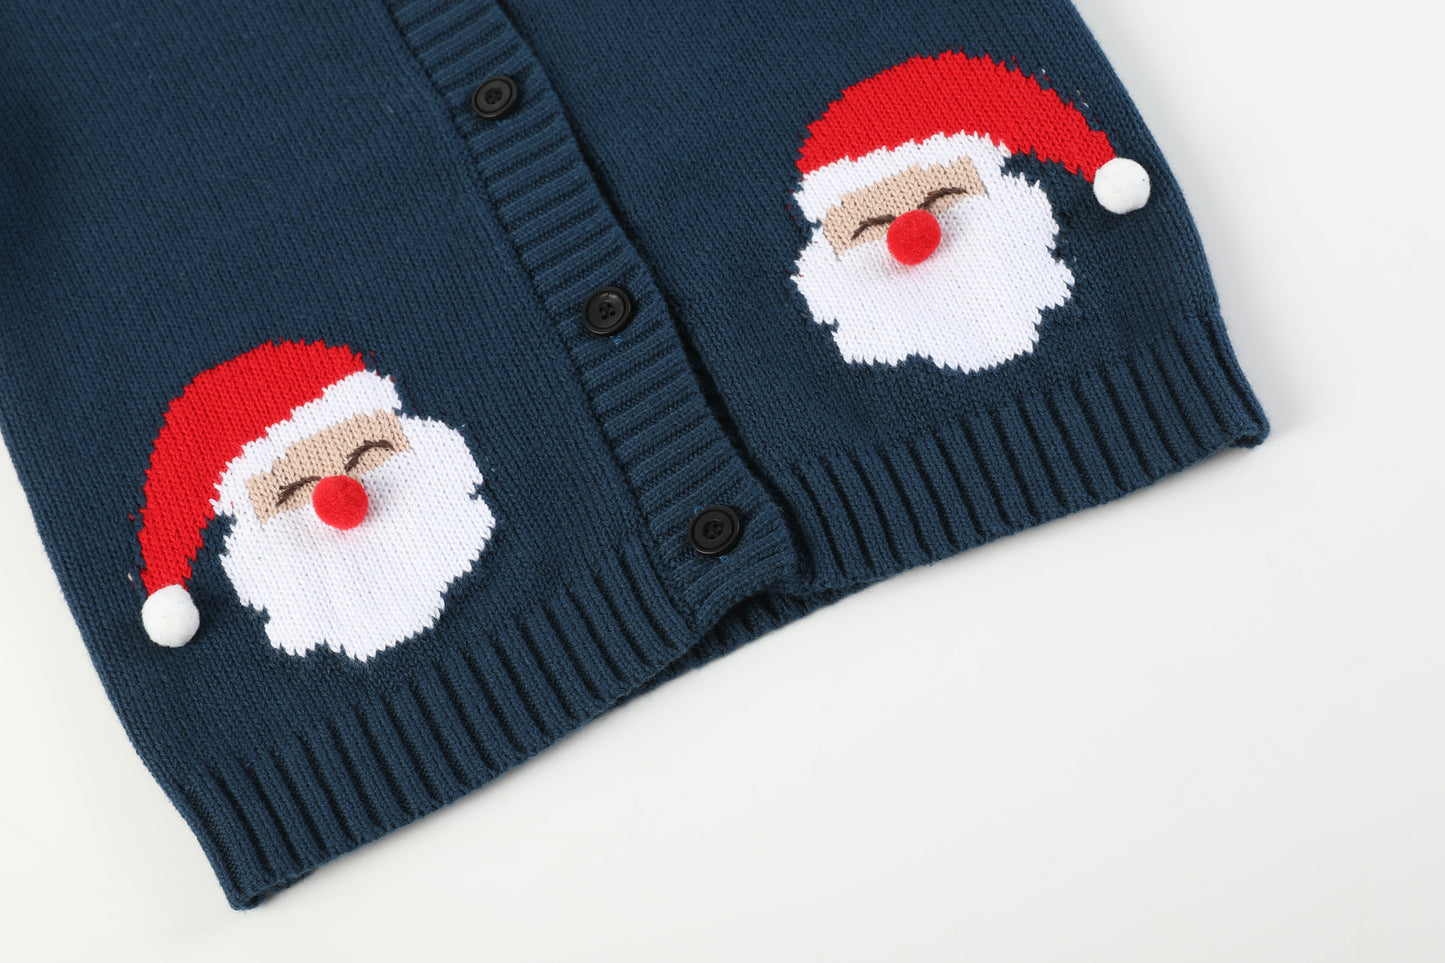 Navy Blue Christmas Santa Knit Cardigan